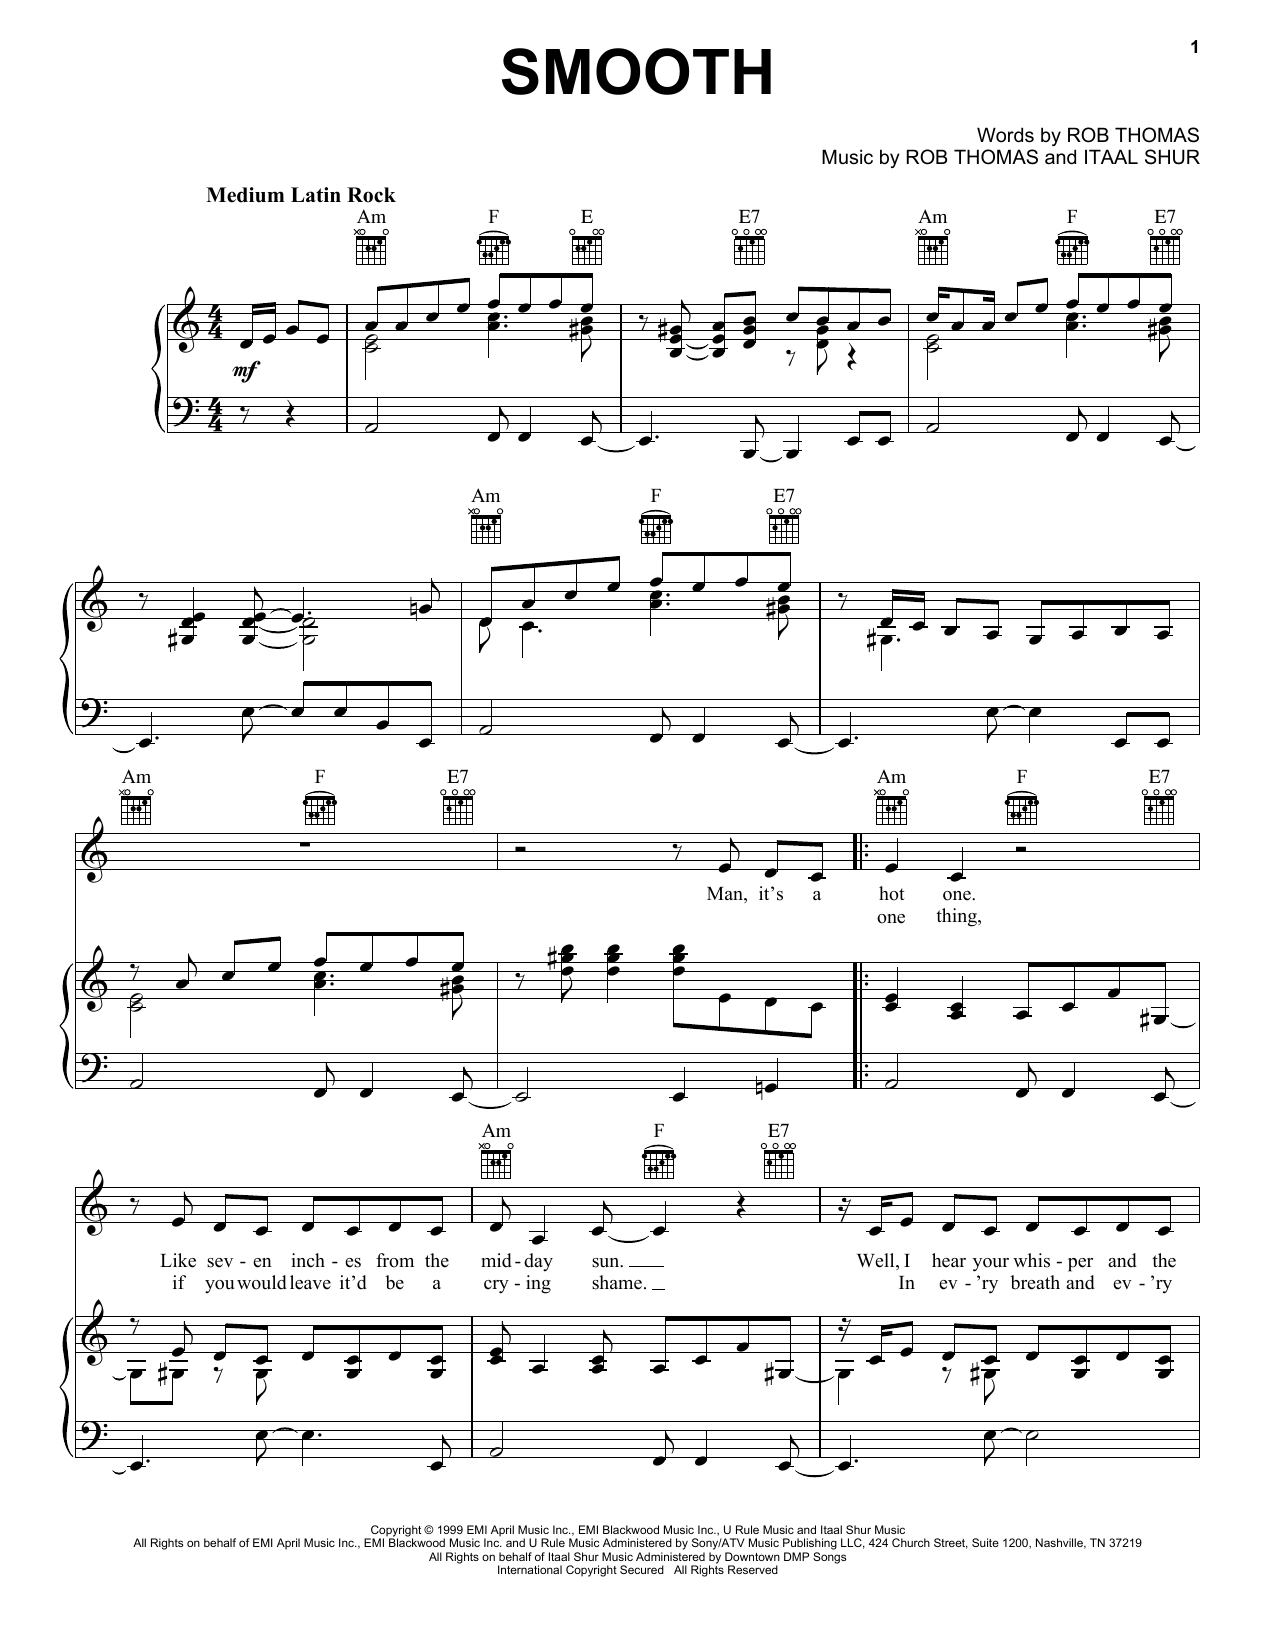 Santana featuring Rob Thomas Smooth sheet music notes printable PDF score